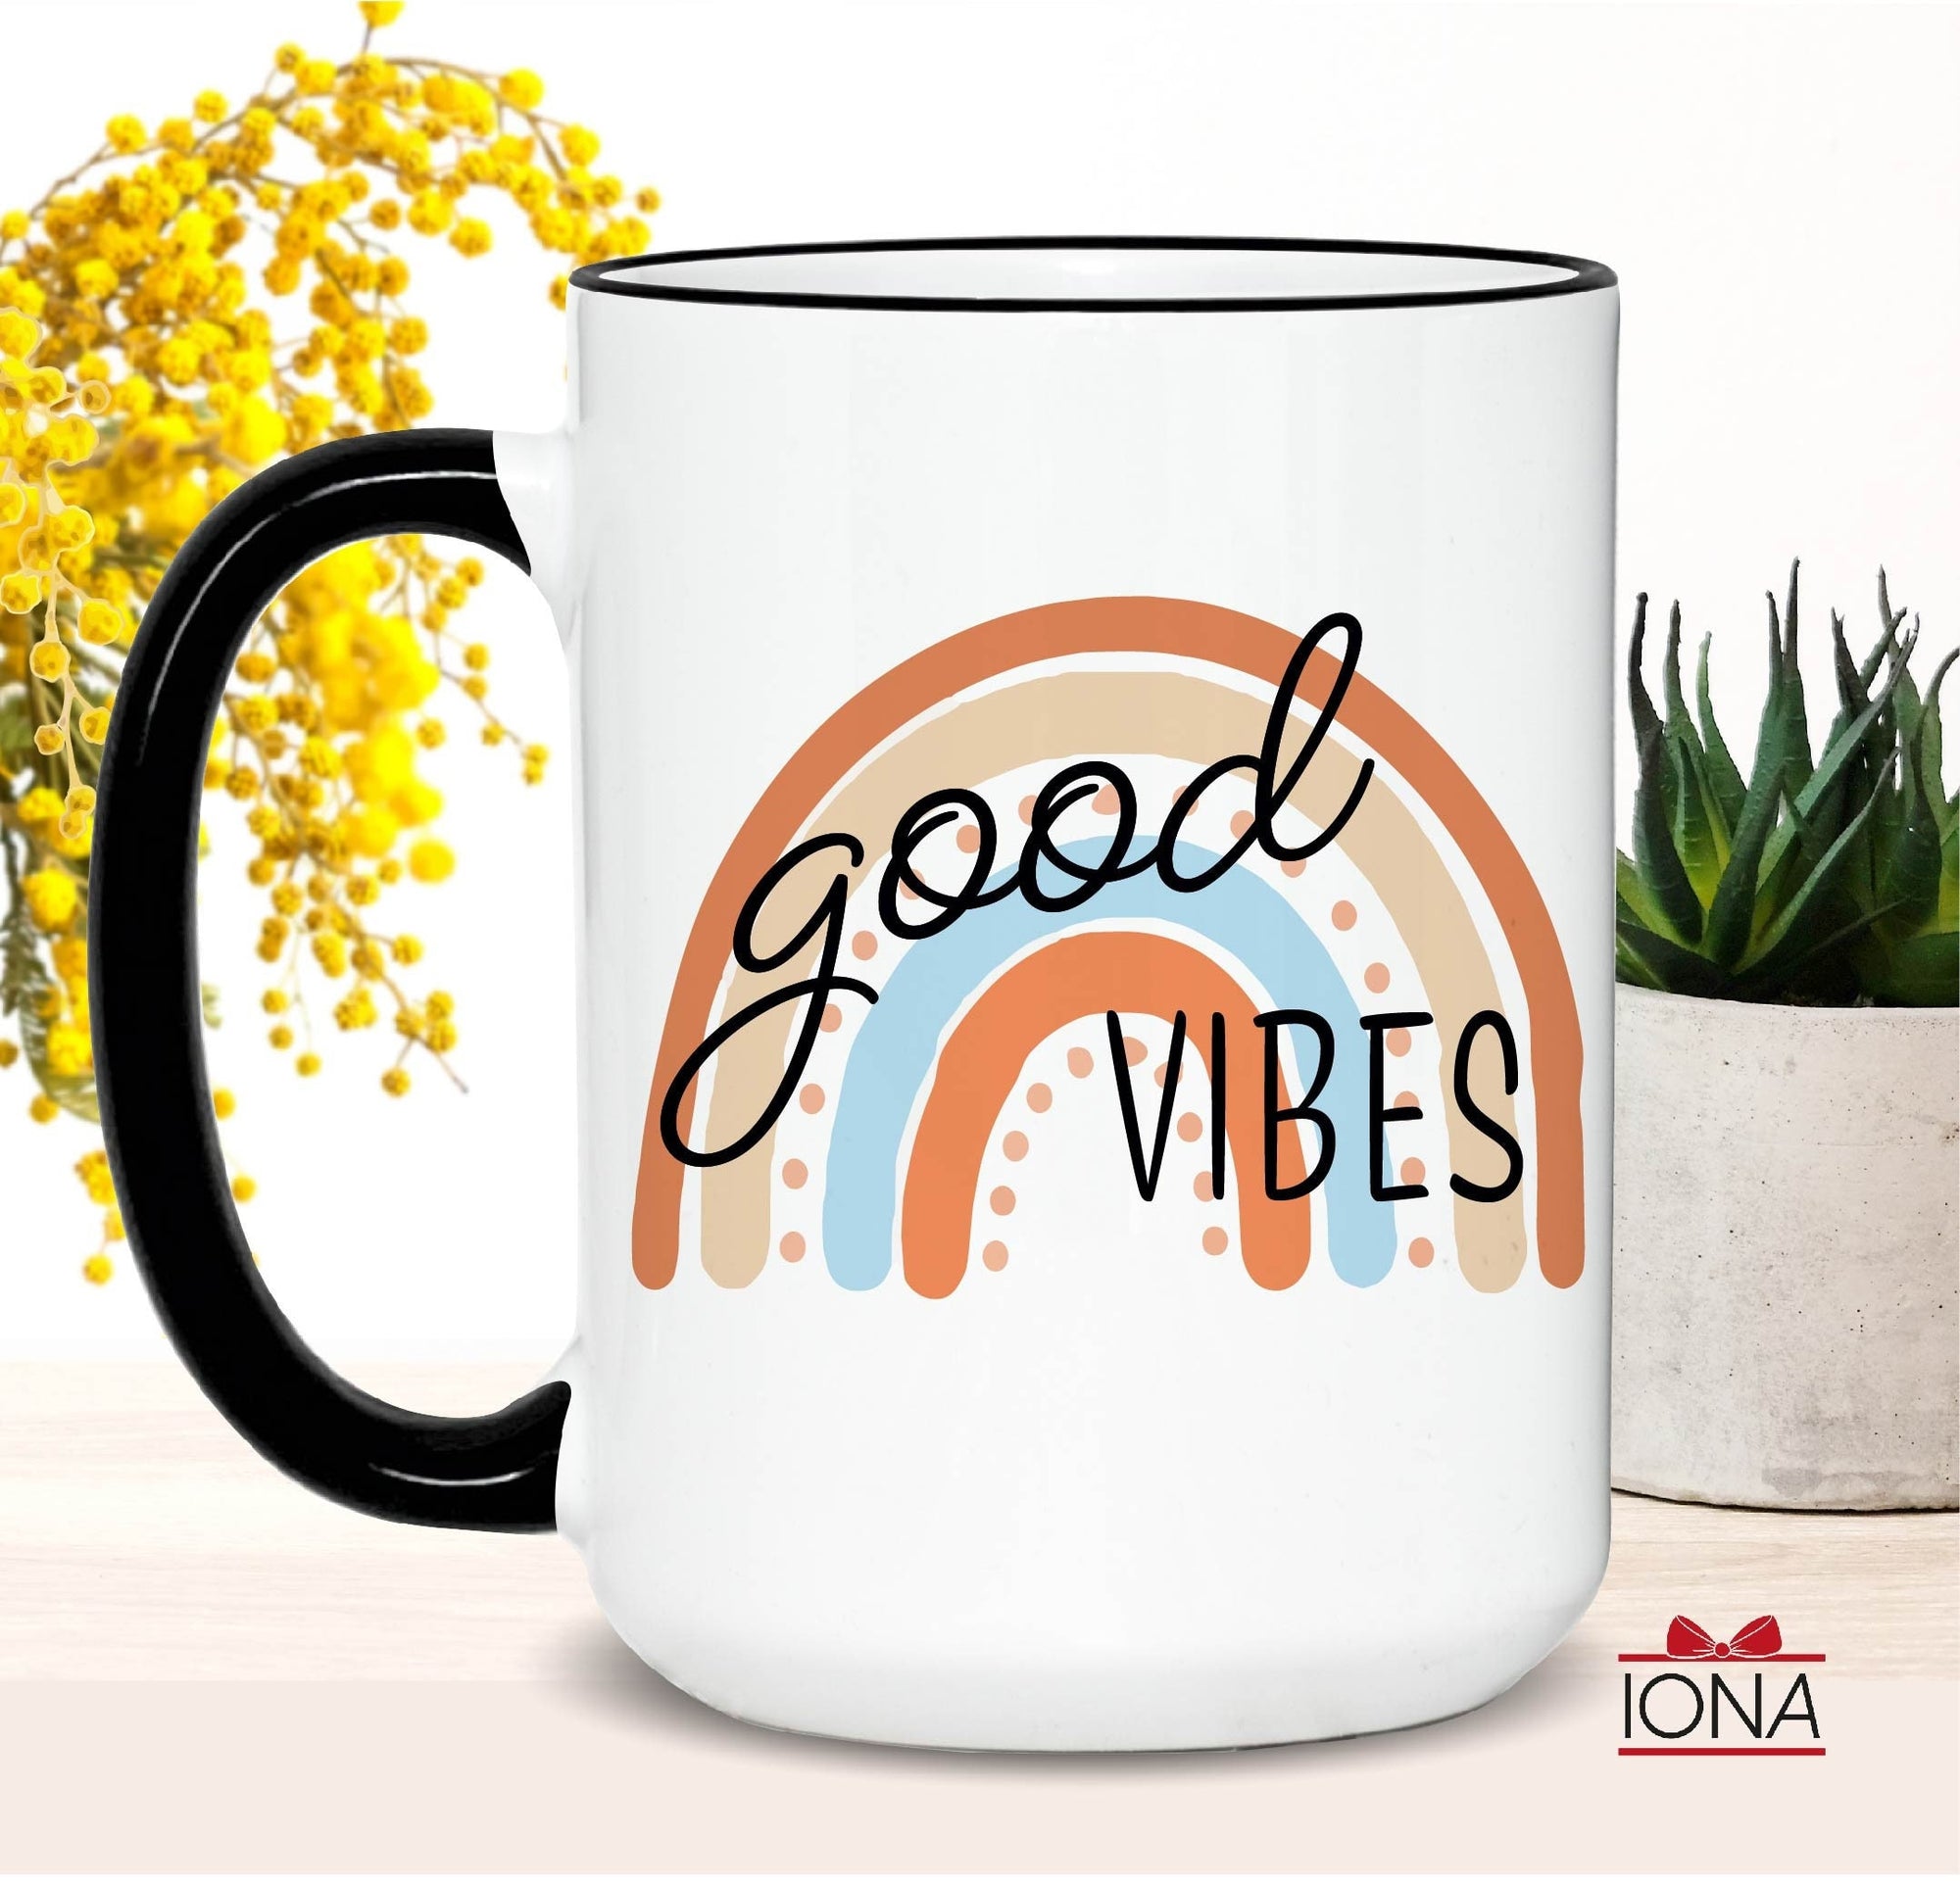 Good Vibes Rainbow Coffee Mug - Rainbow Mug - Positive Gift- Gift for Friend - Gift for Girlfriend - Encouragement Gift - Inspirational Mug